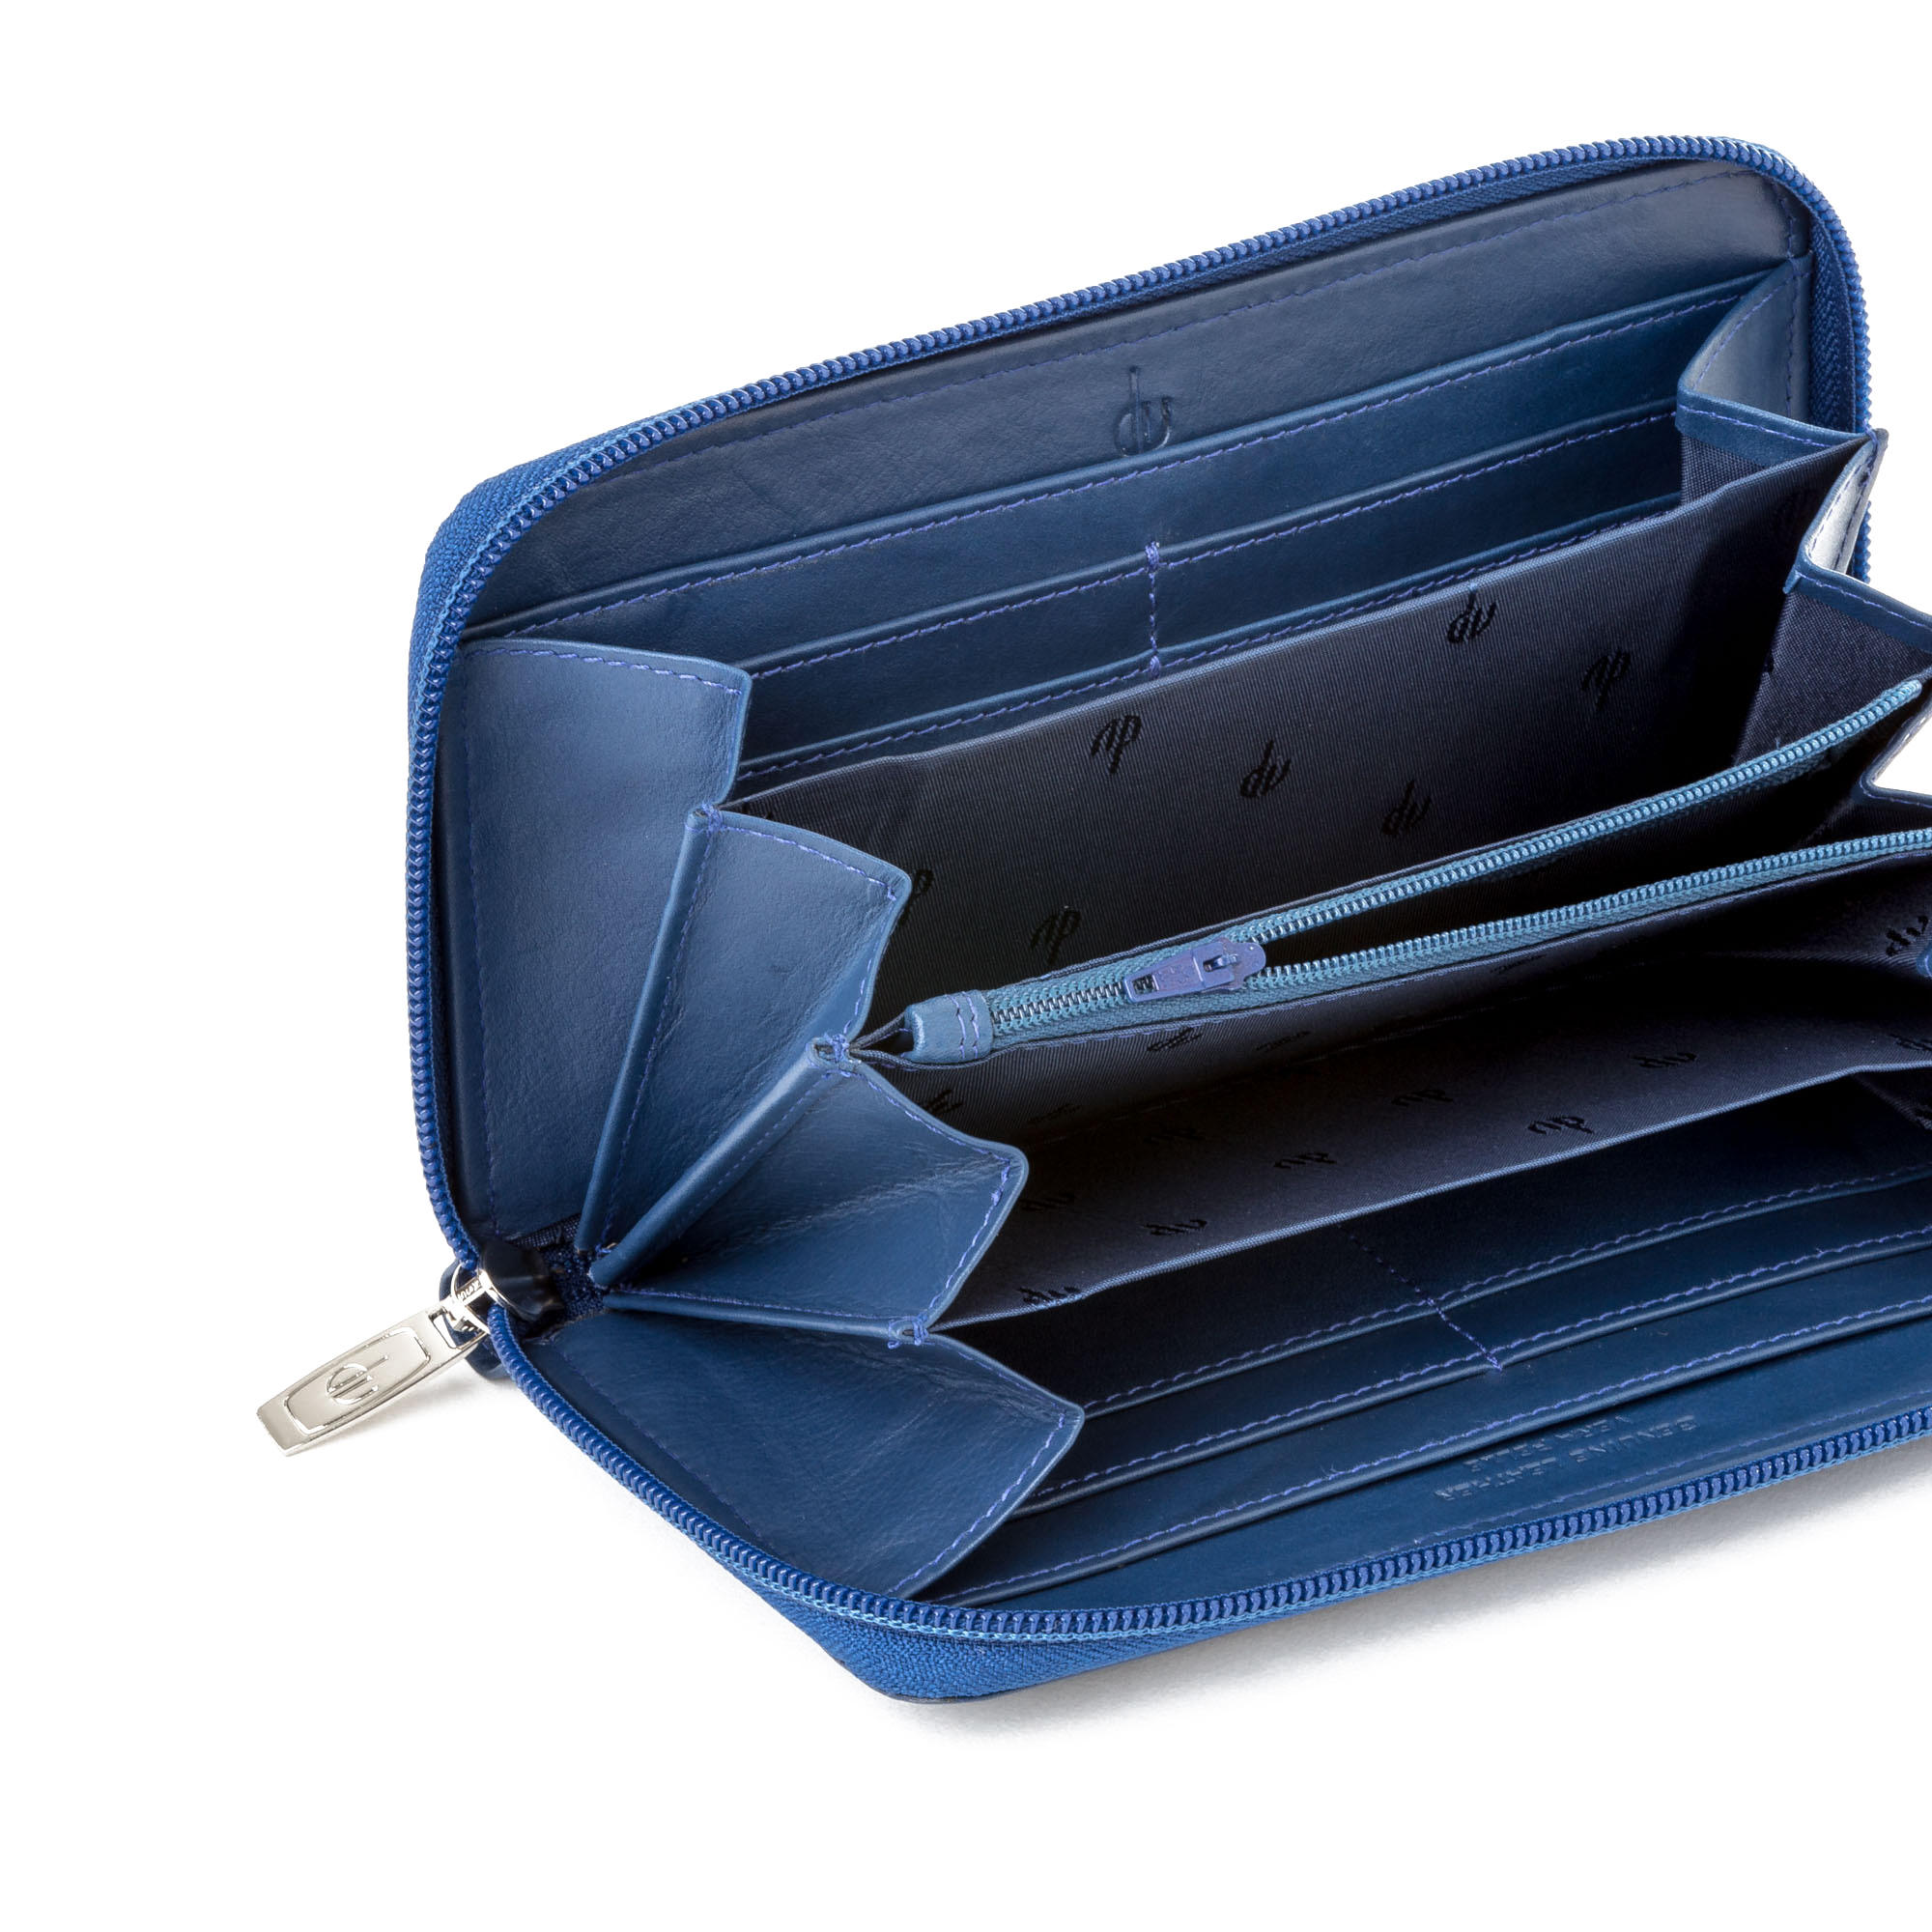 Zip around purse for women leather Expanding long wallet DV Blue | eBay